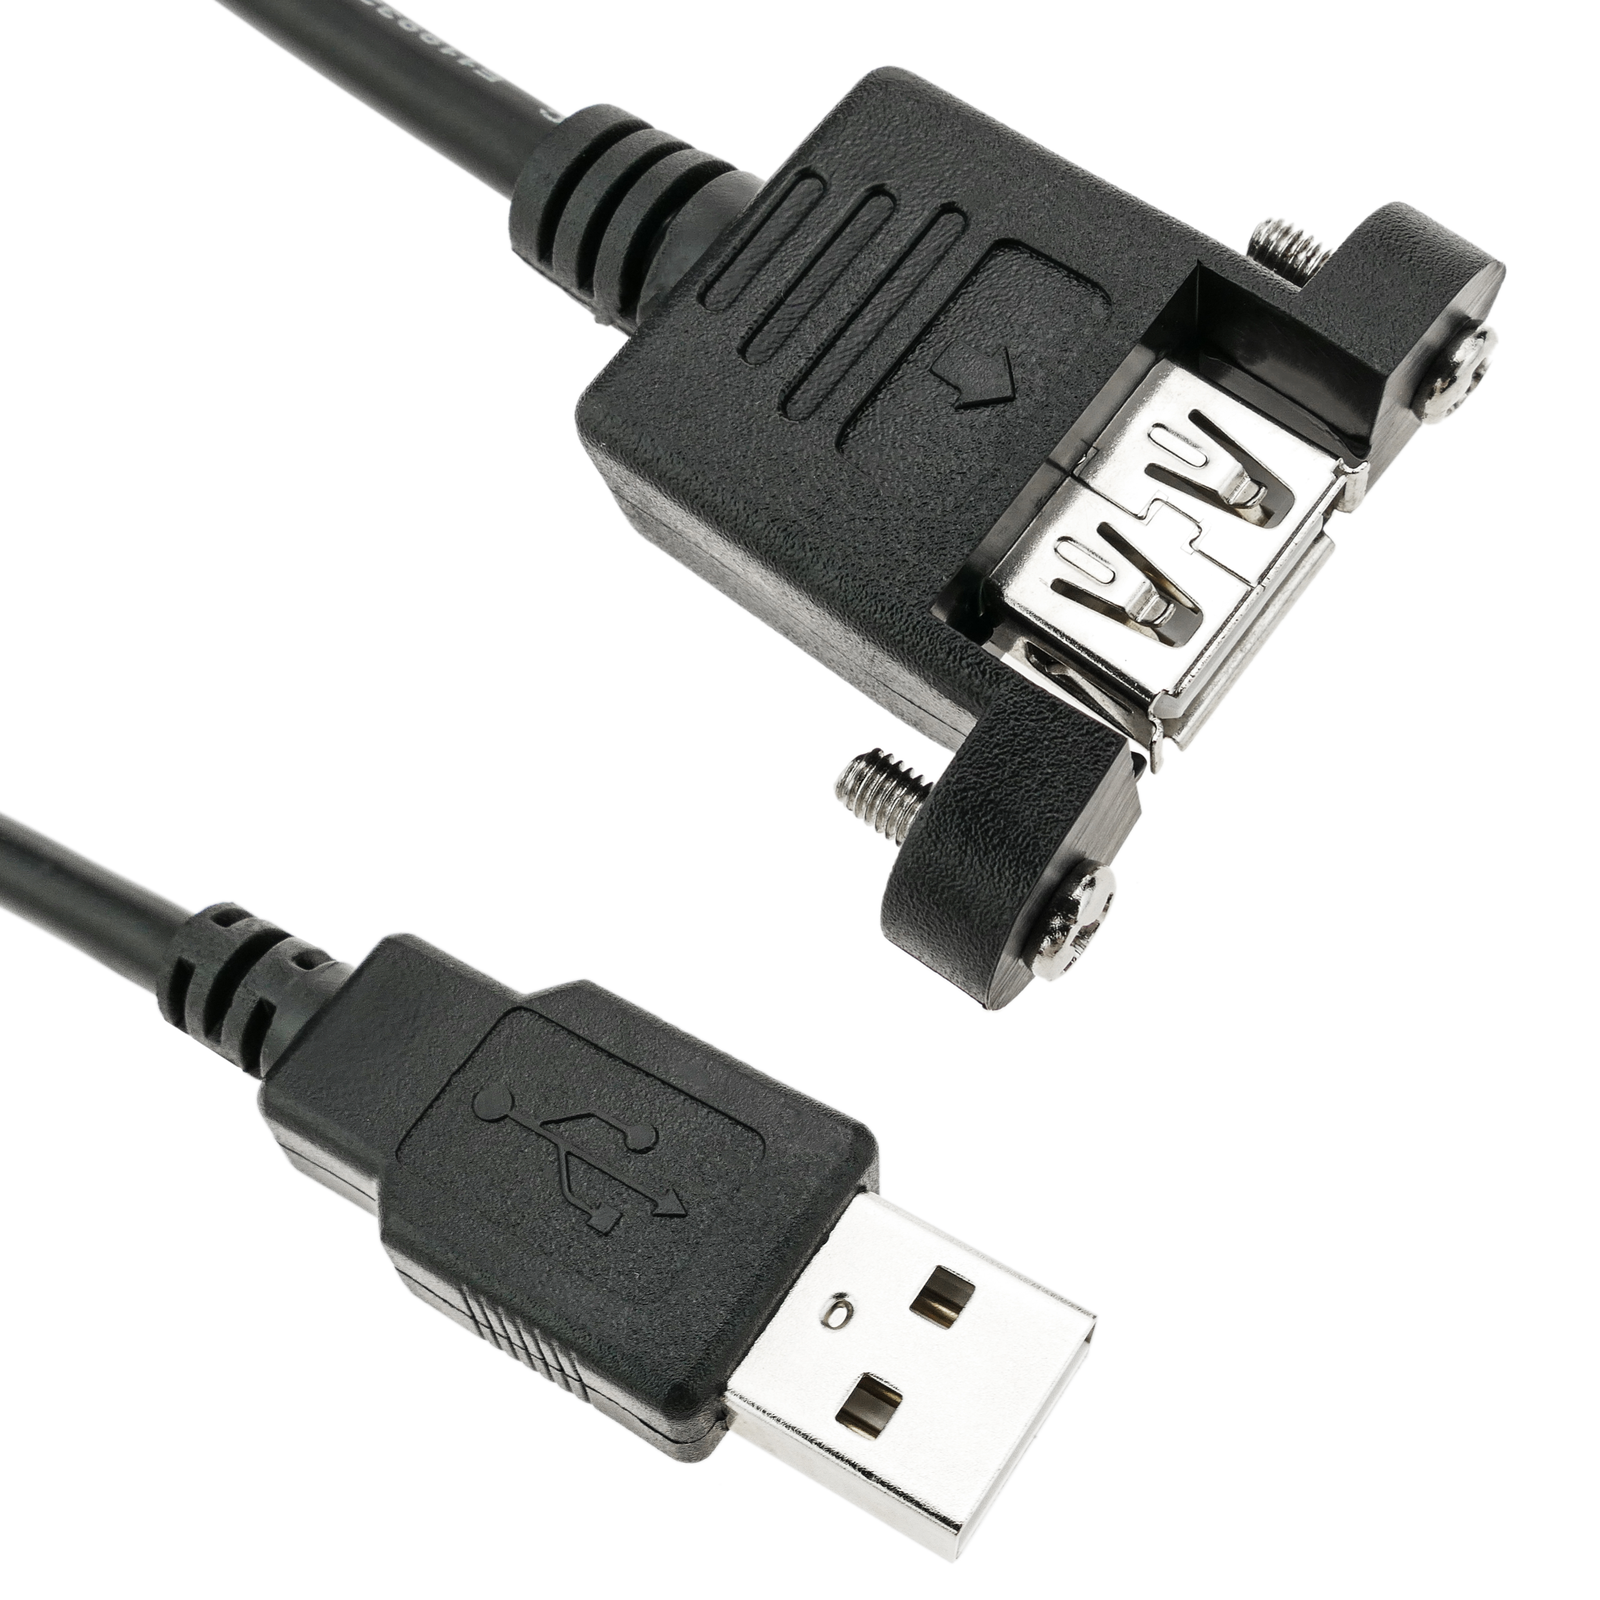 Equip Cable Alargador USB 2.0 Activo - Doble Blindaje - Longitud 15m -  Color Negro